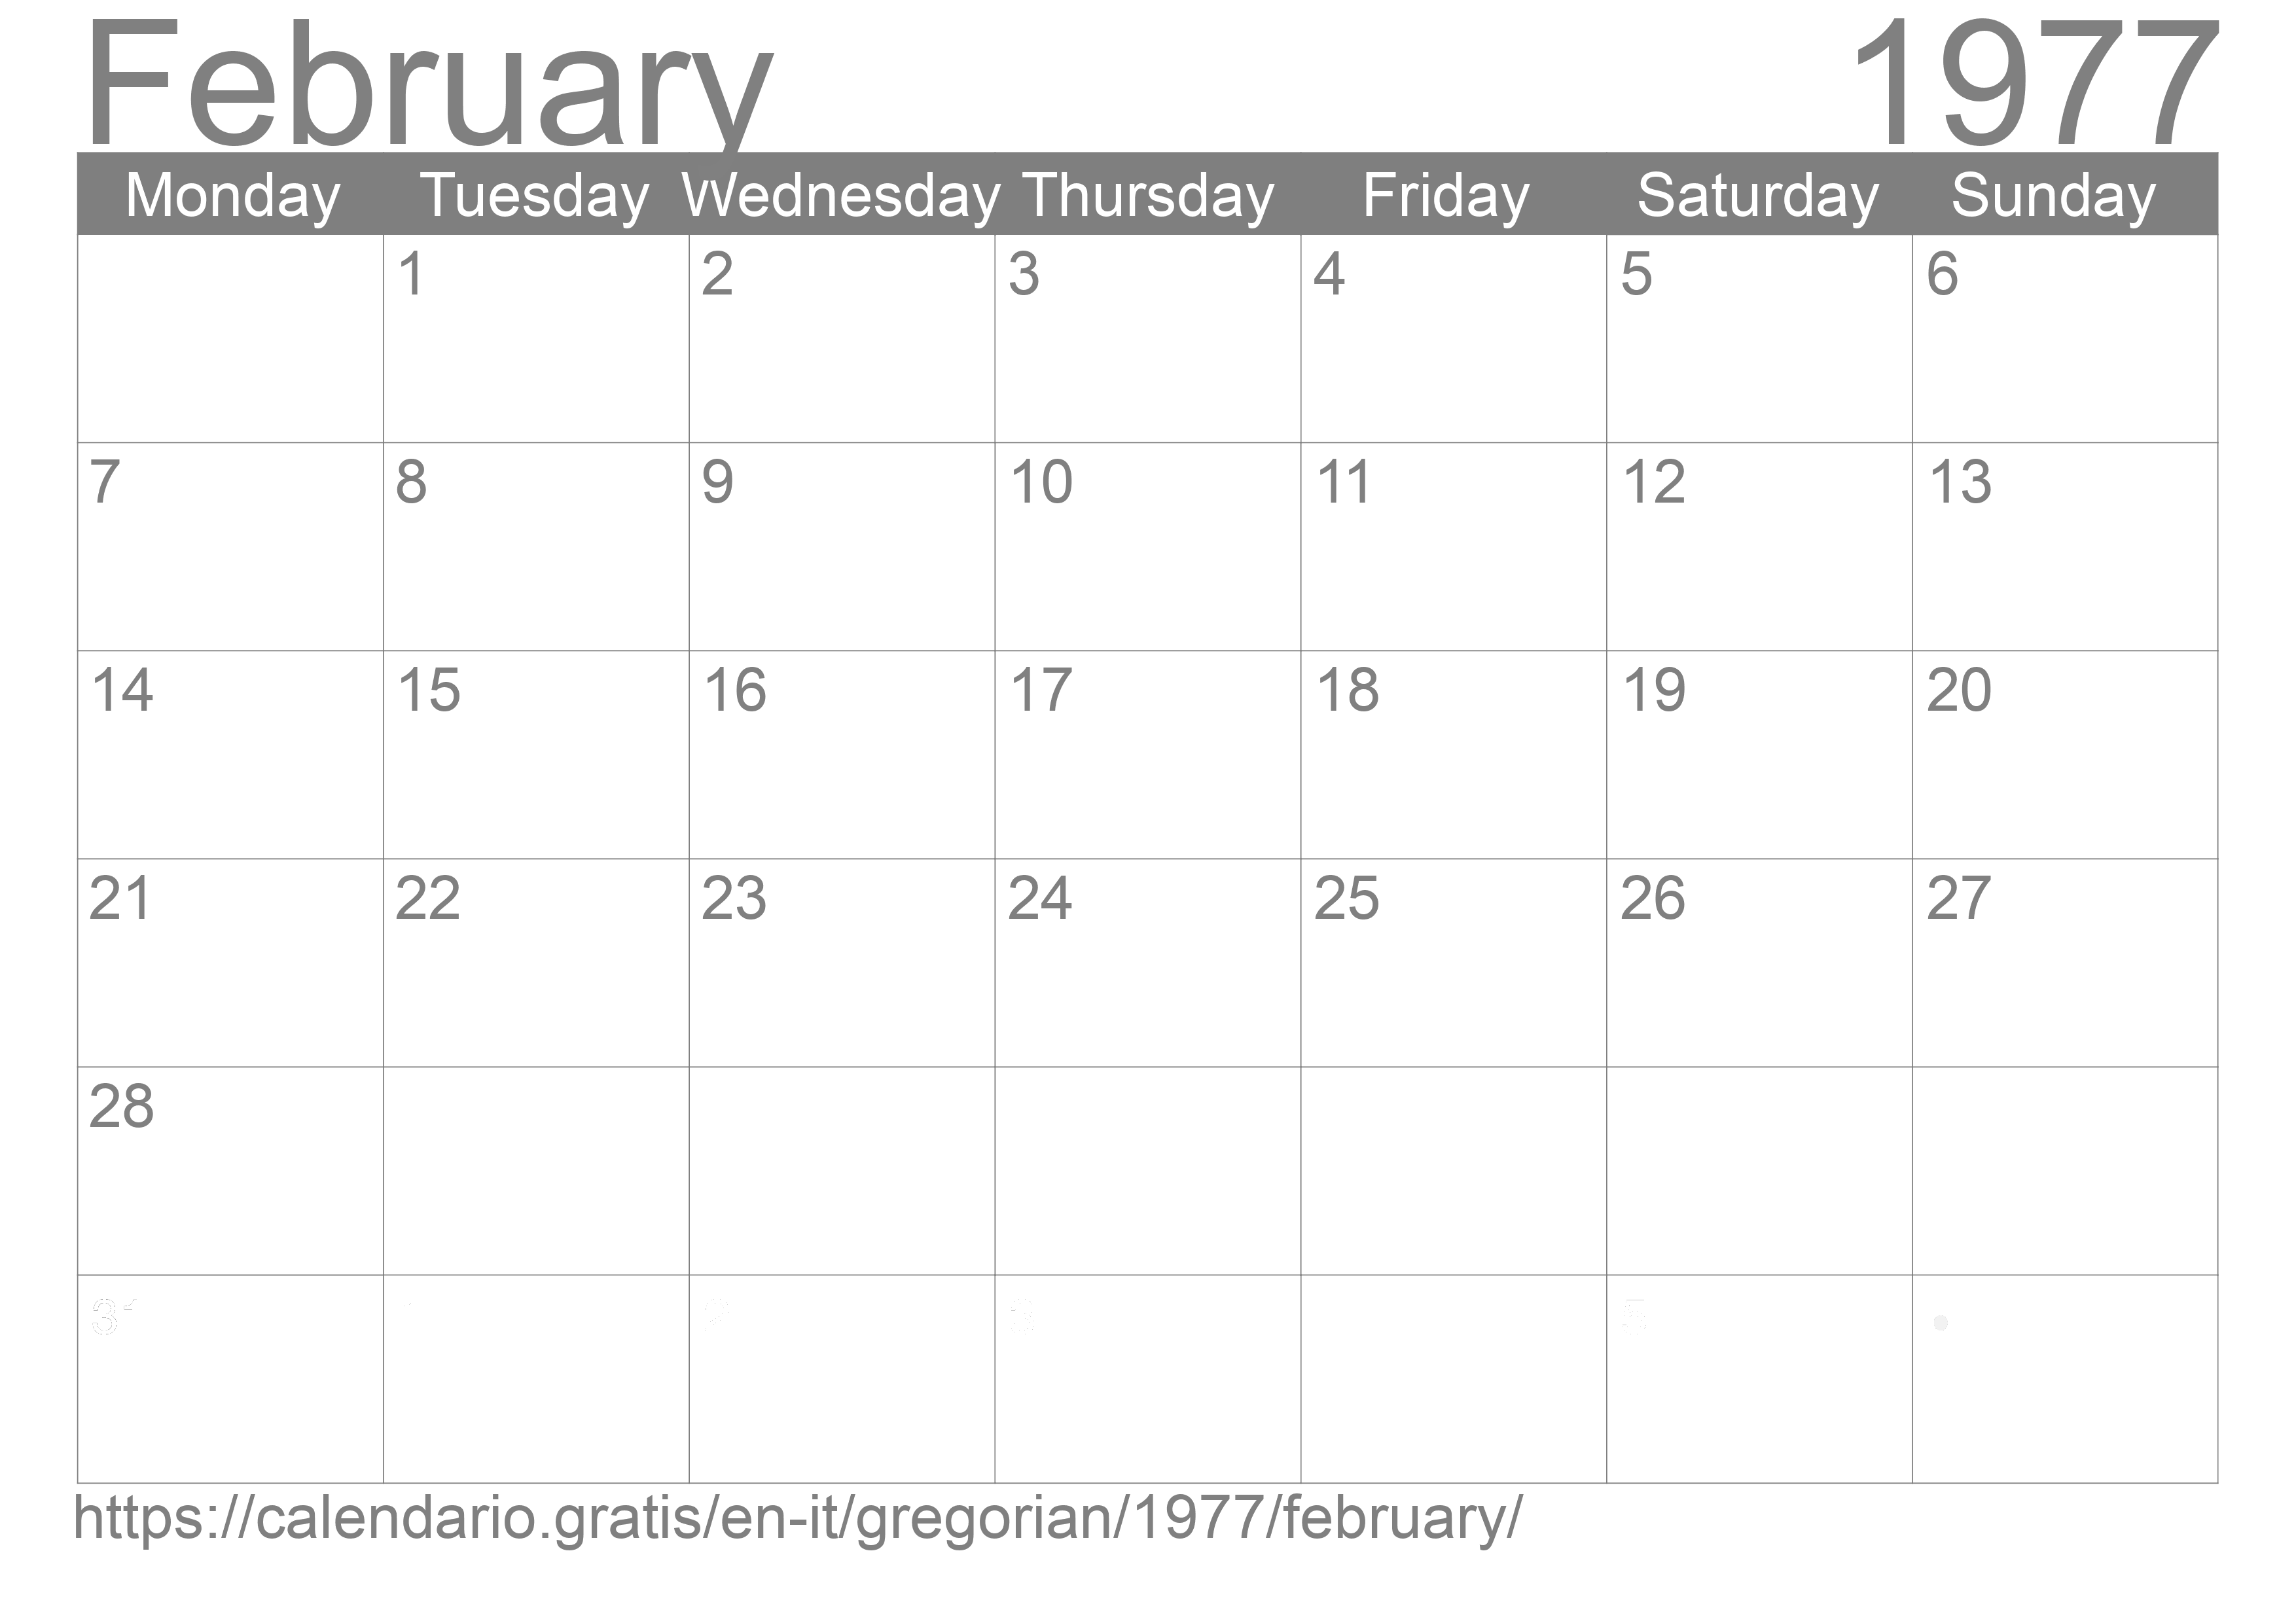 Calendar February 1977 to print